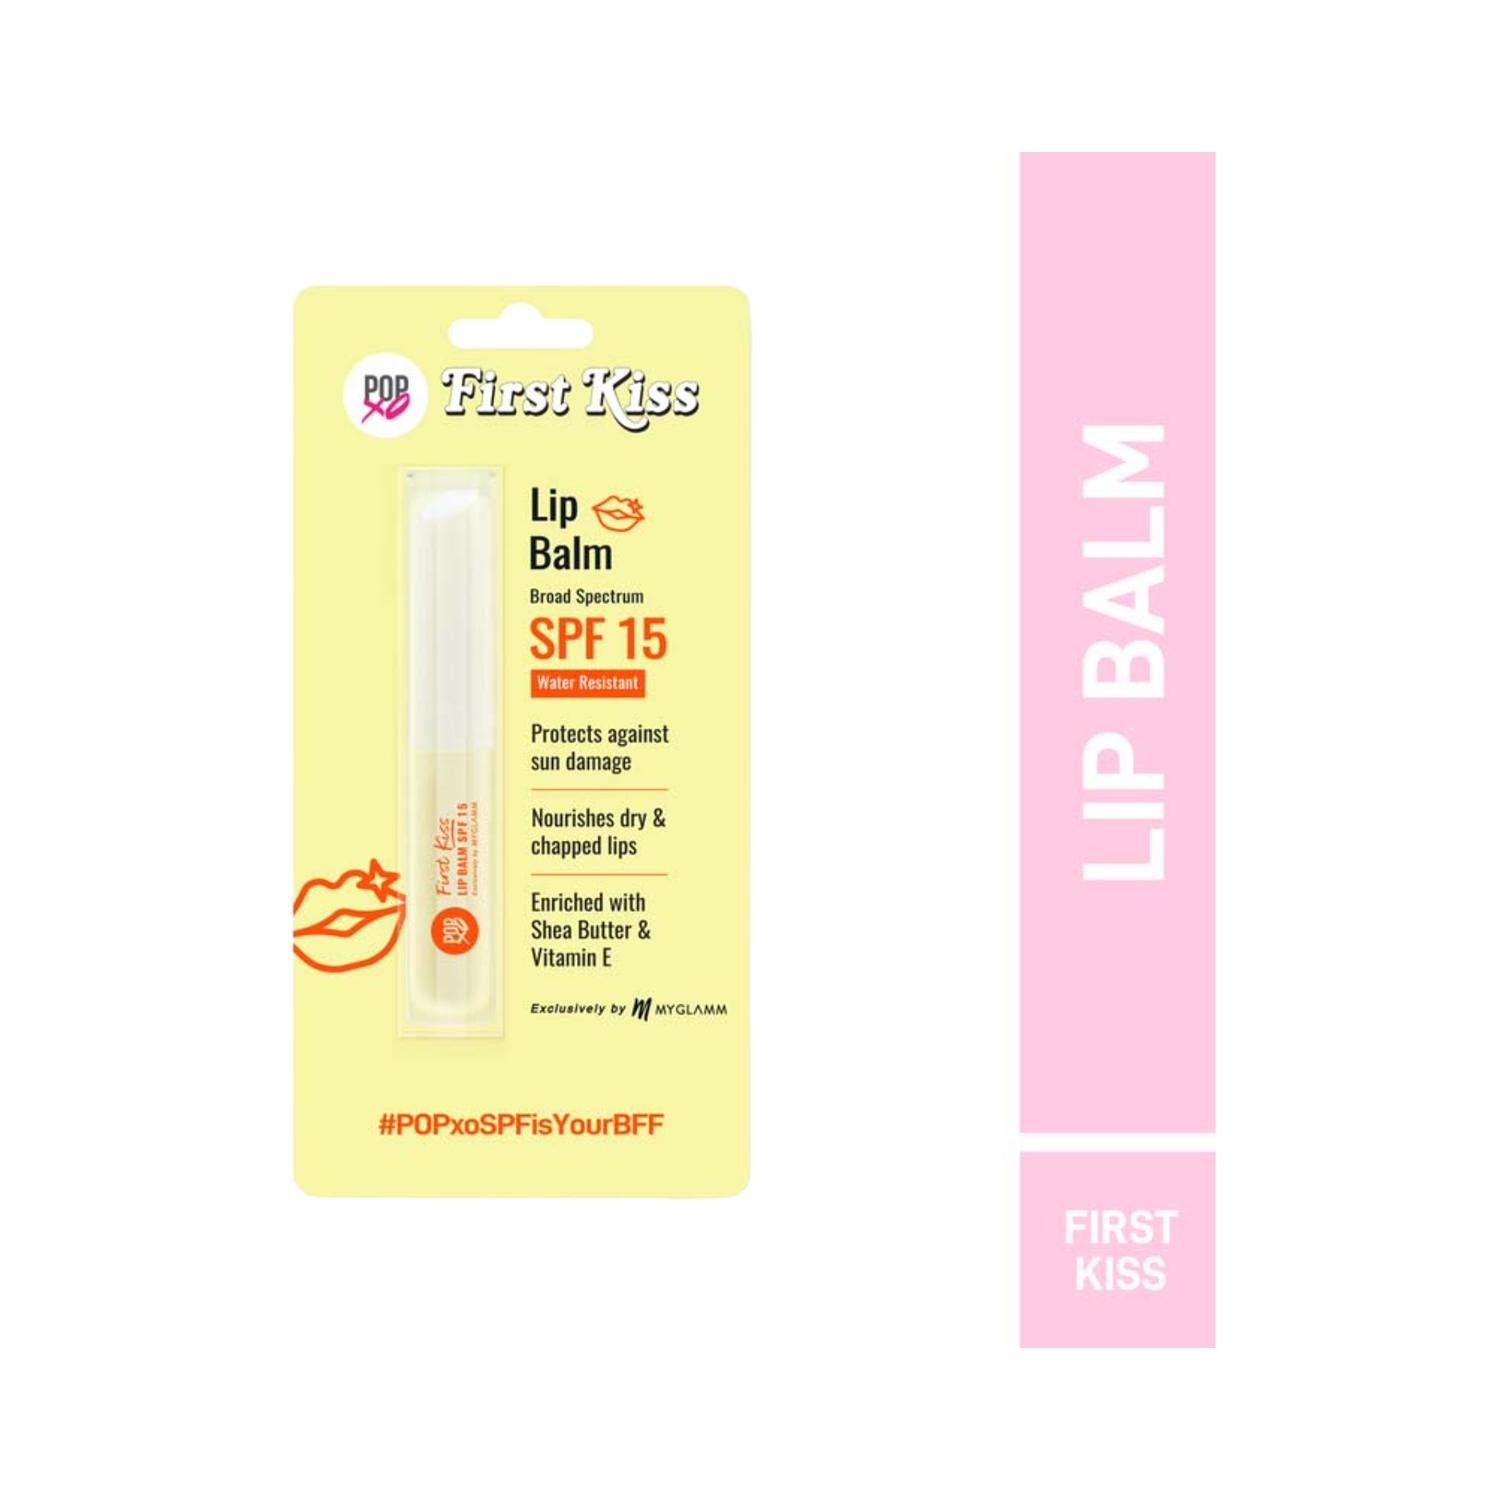 MyGlamm Popxo First Kiss Lip Balm SPF 15 - Clear (15g)